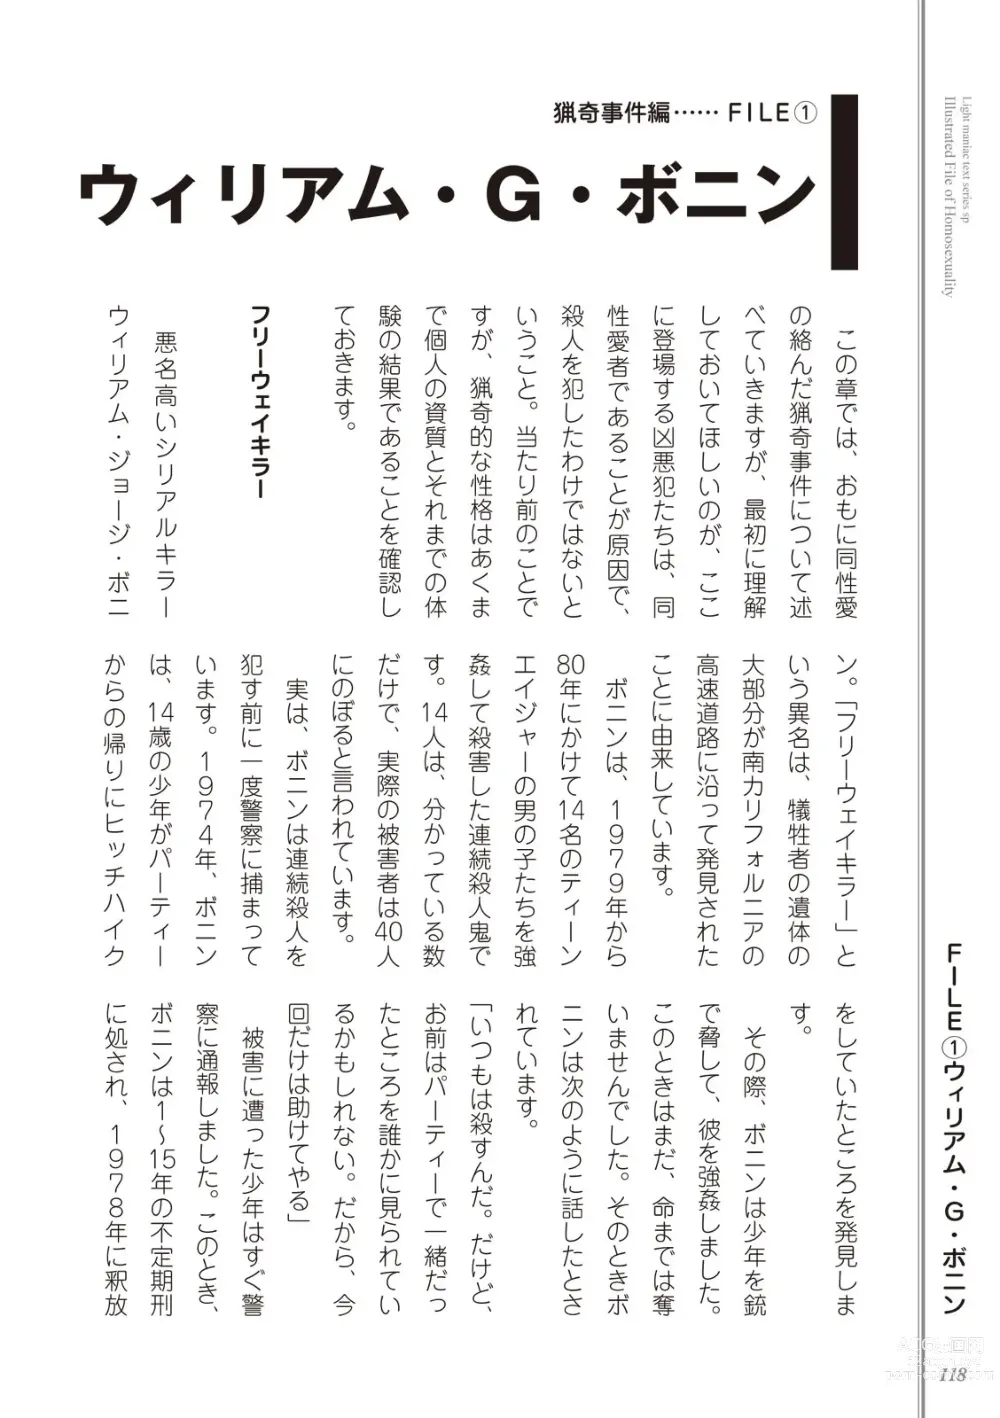 Page 120 of manga Kusa no Rekishi o Atsumete Mairimashita.  Oosame Kudasai - Light maniac text series sp Illustrated File of Homosexuality